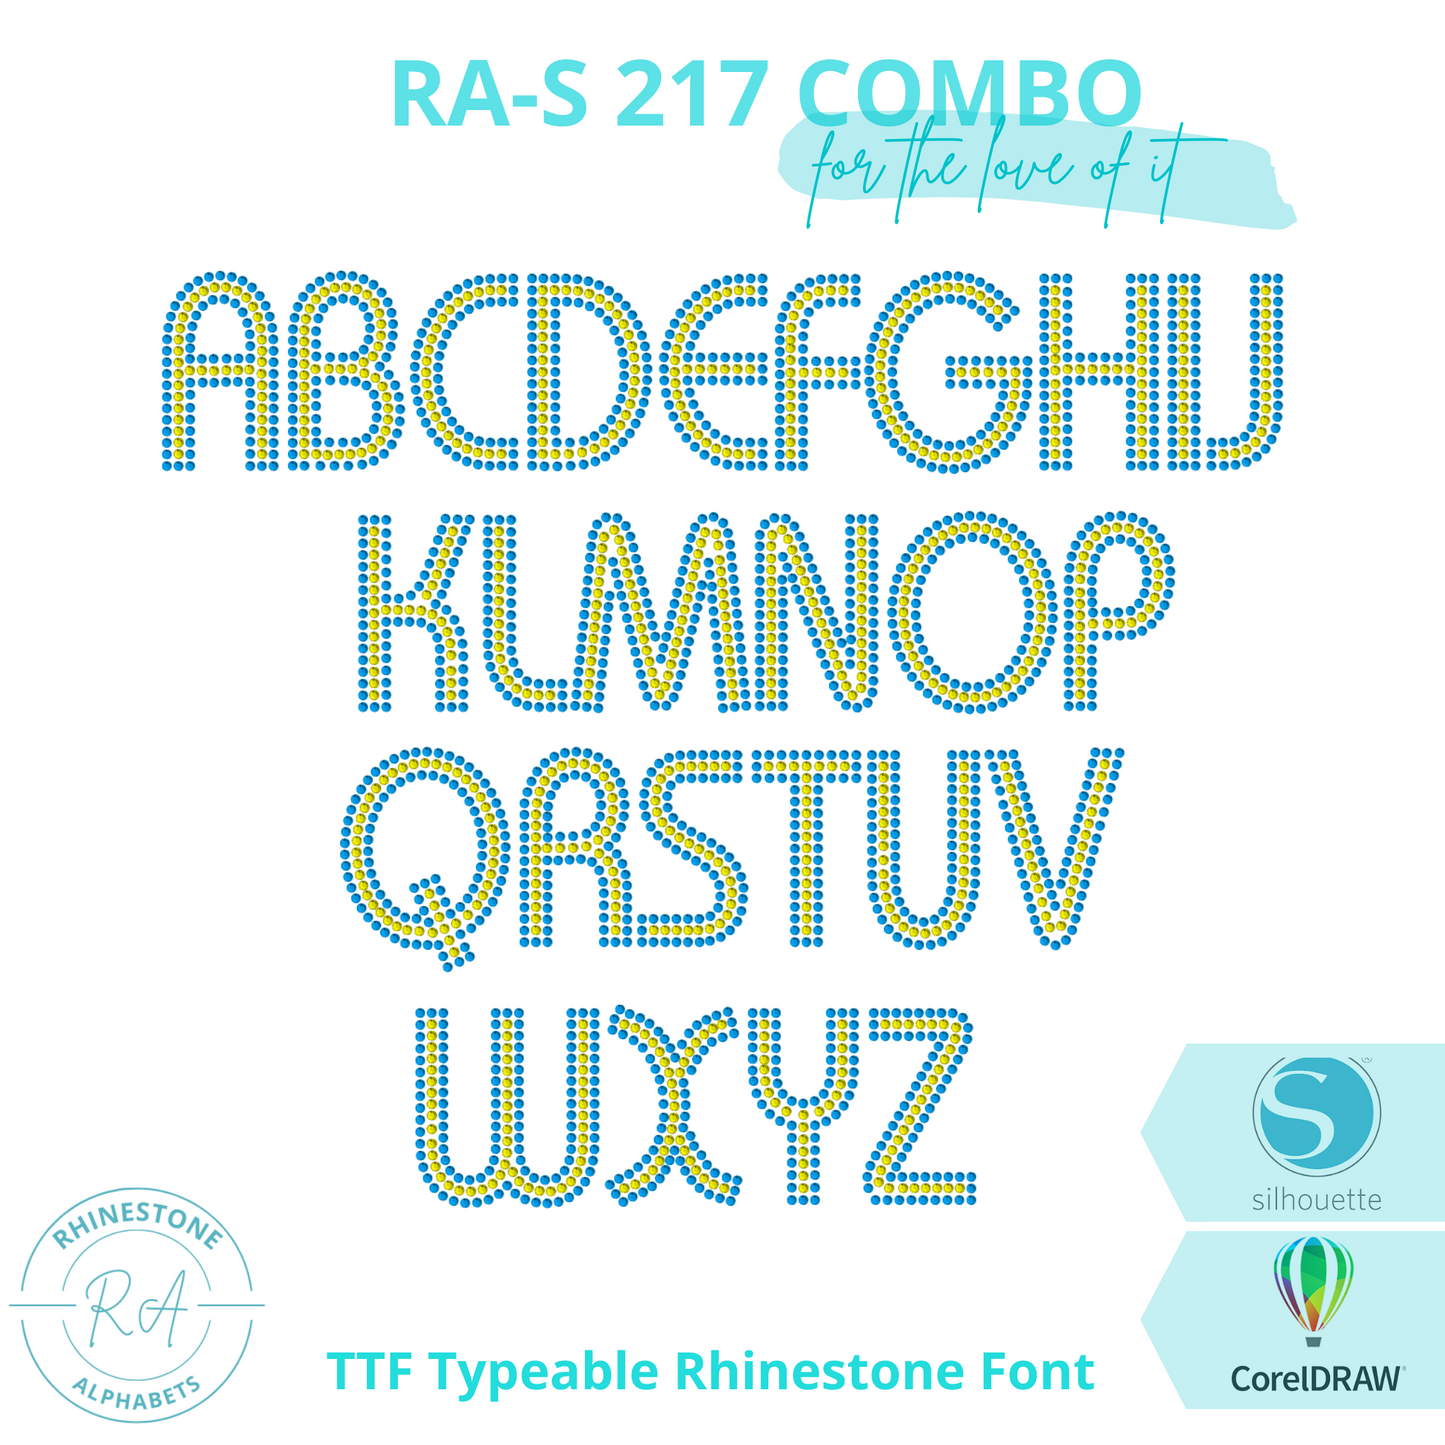 RA-S 217 Combo - RhinestoneAlphabets